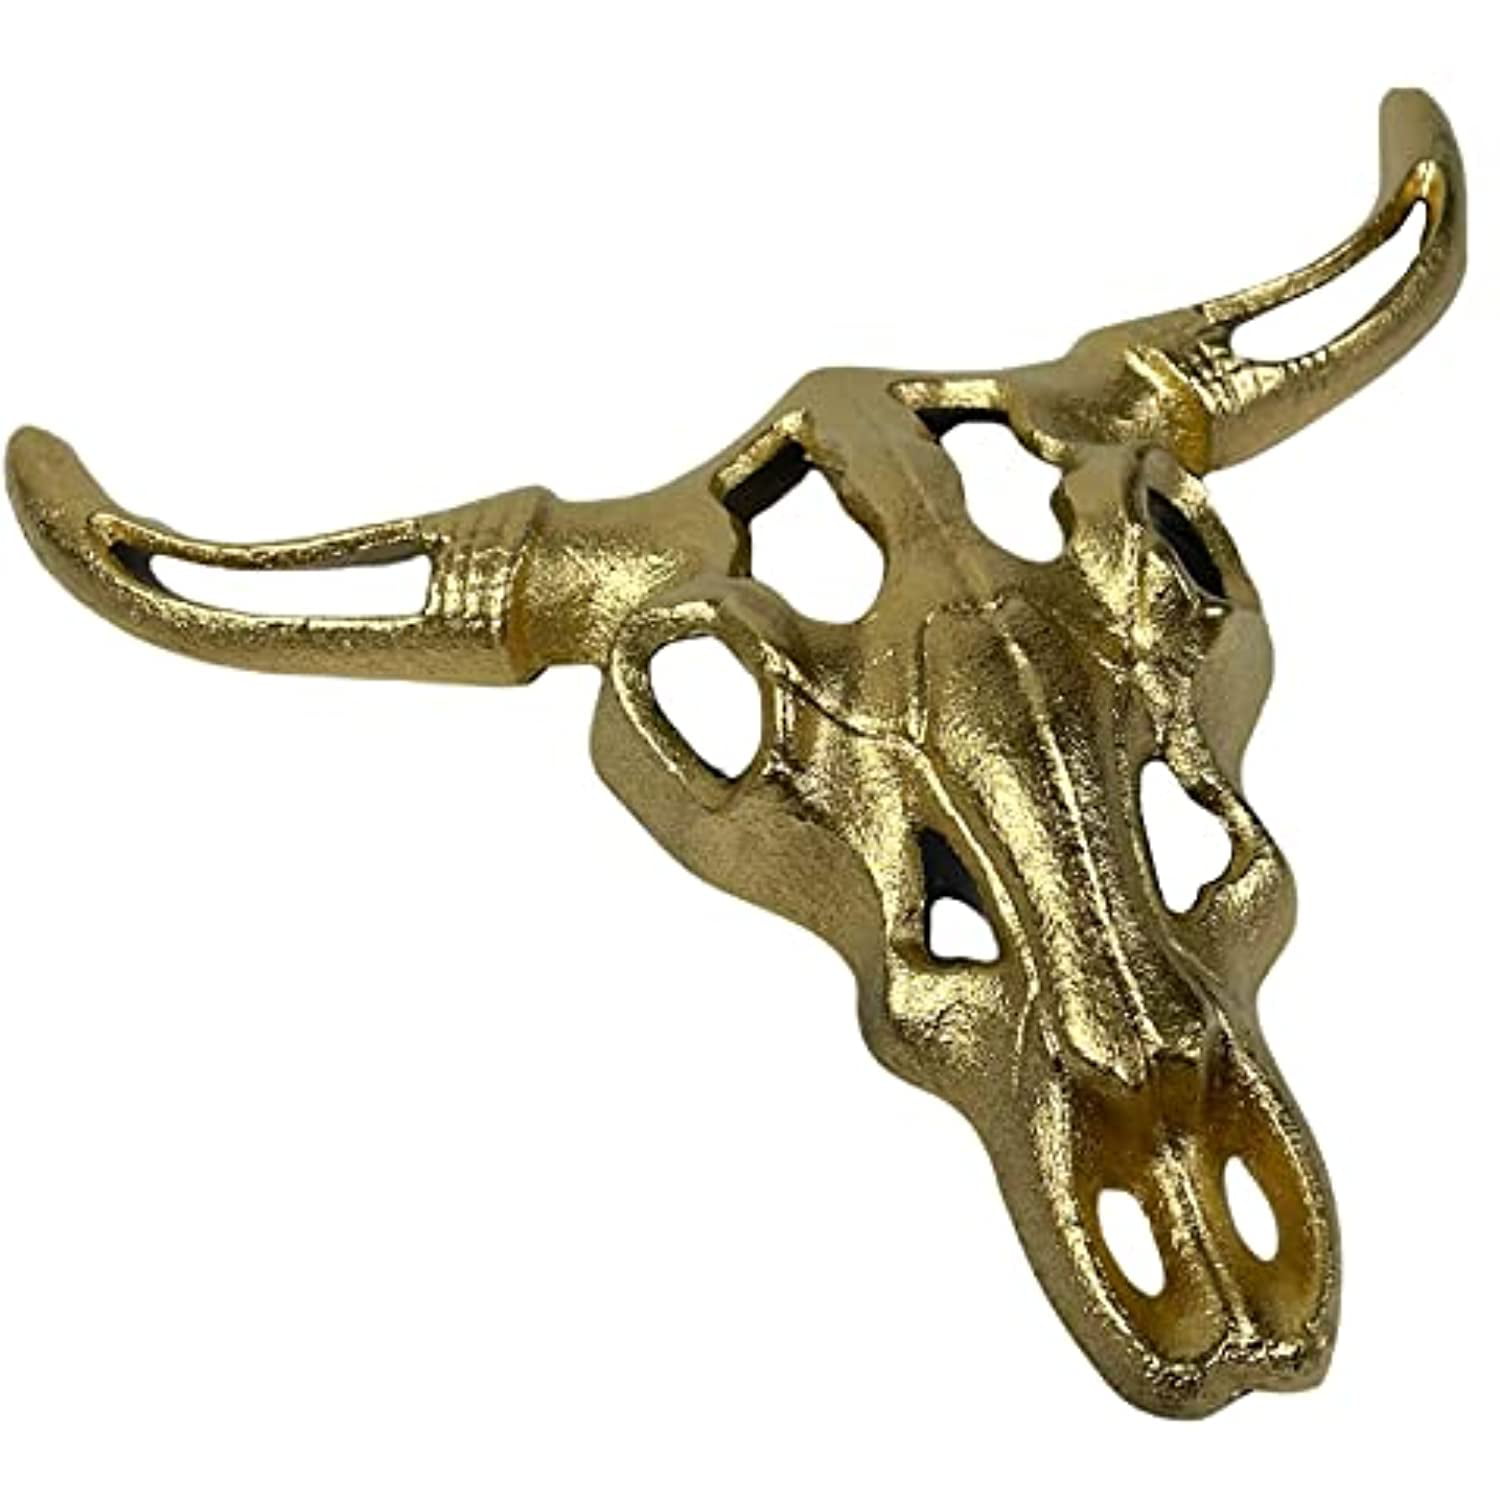 Wall mount goat skull sculpture decor animal hanging home art head trophy statue 